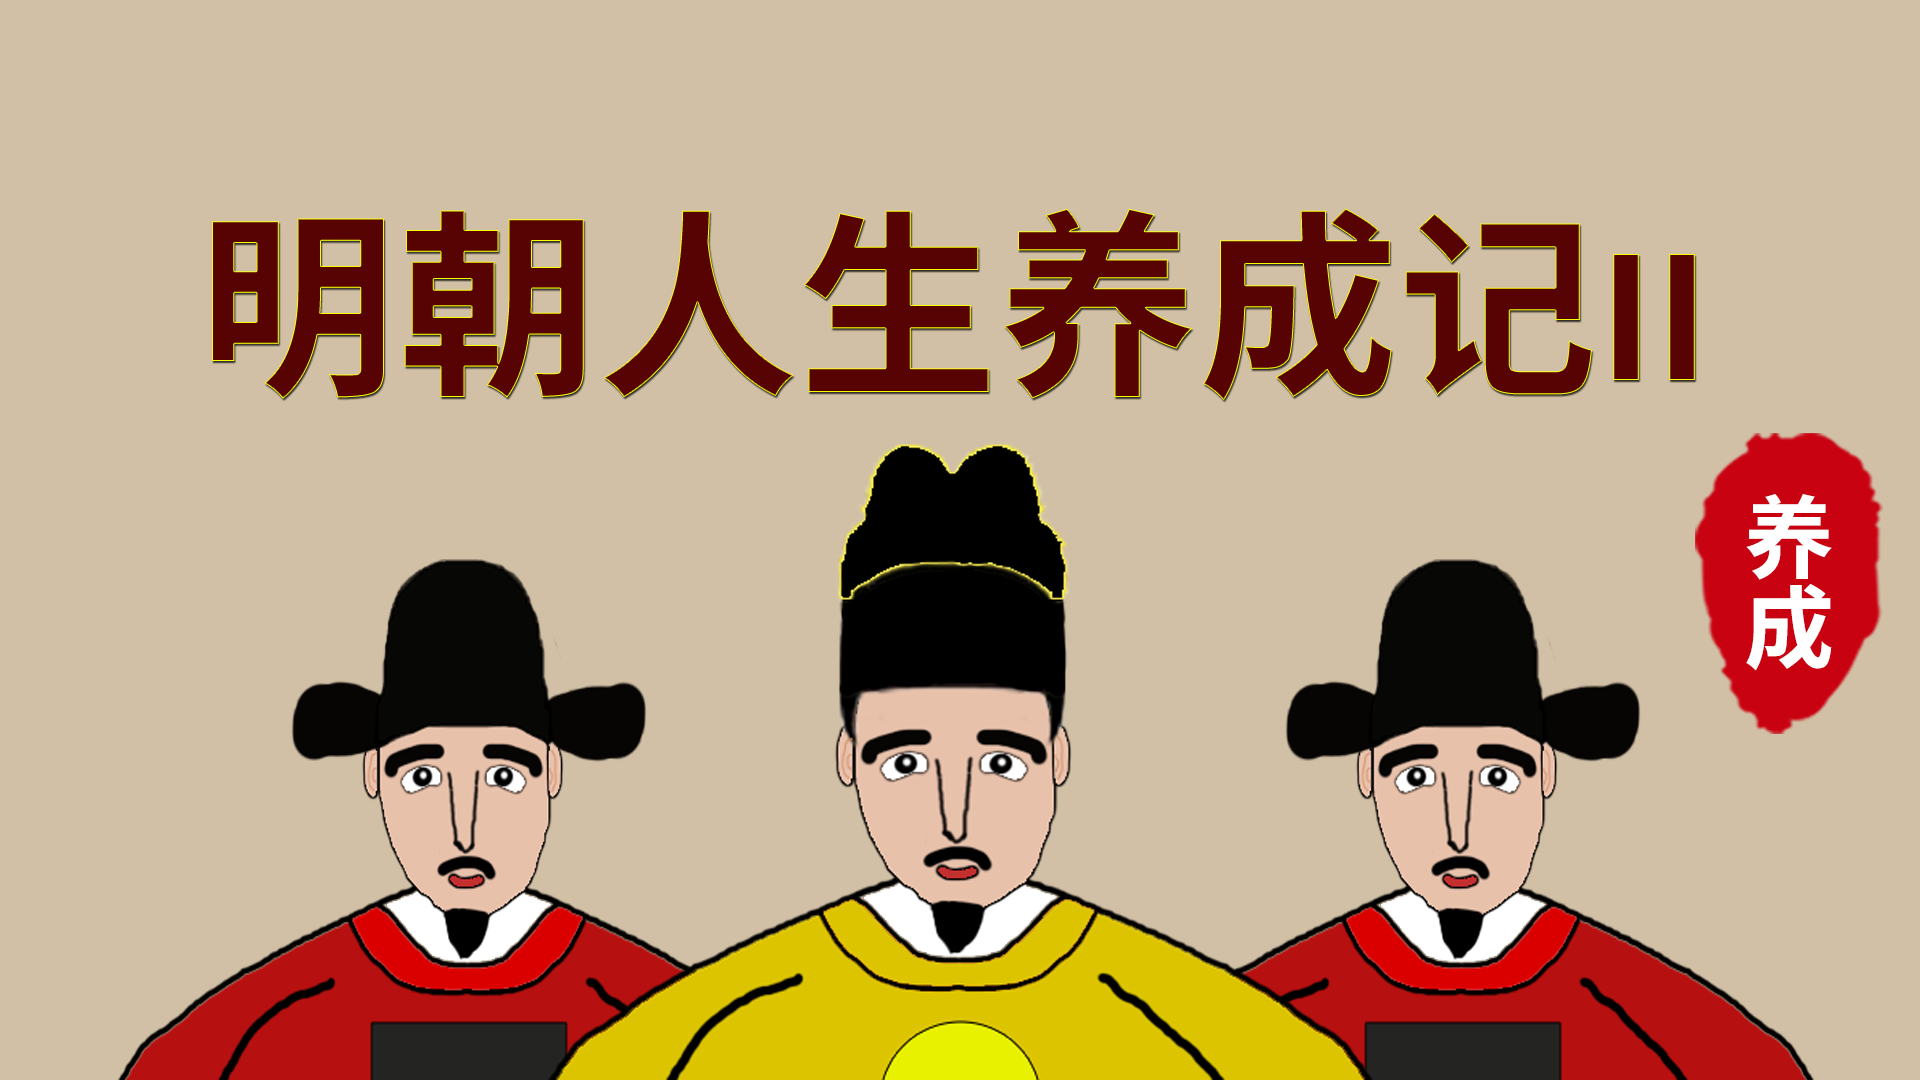 Banner of Kisah Perkembangan Kehidupan Dinasti Ming 2 